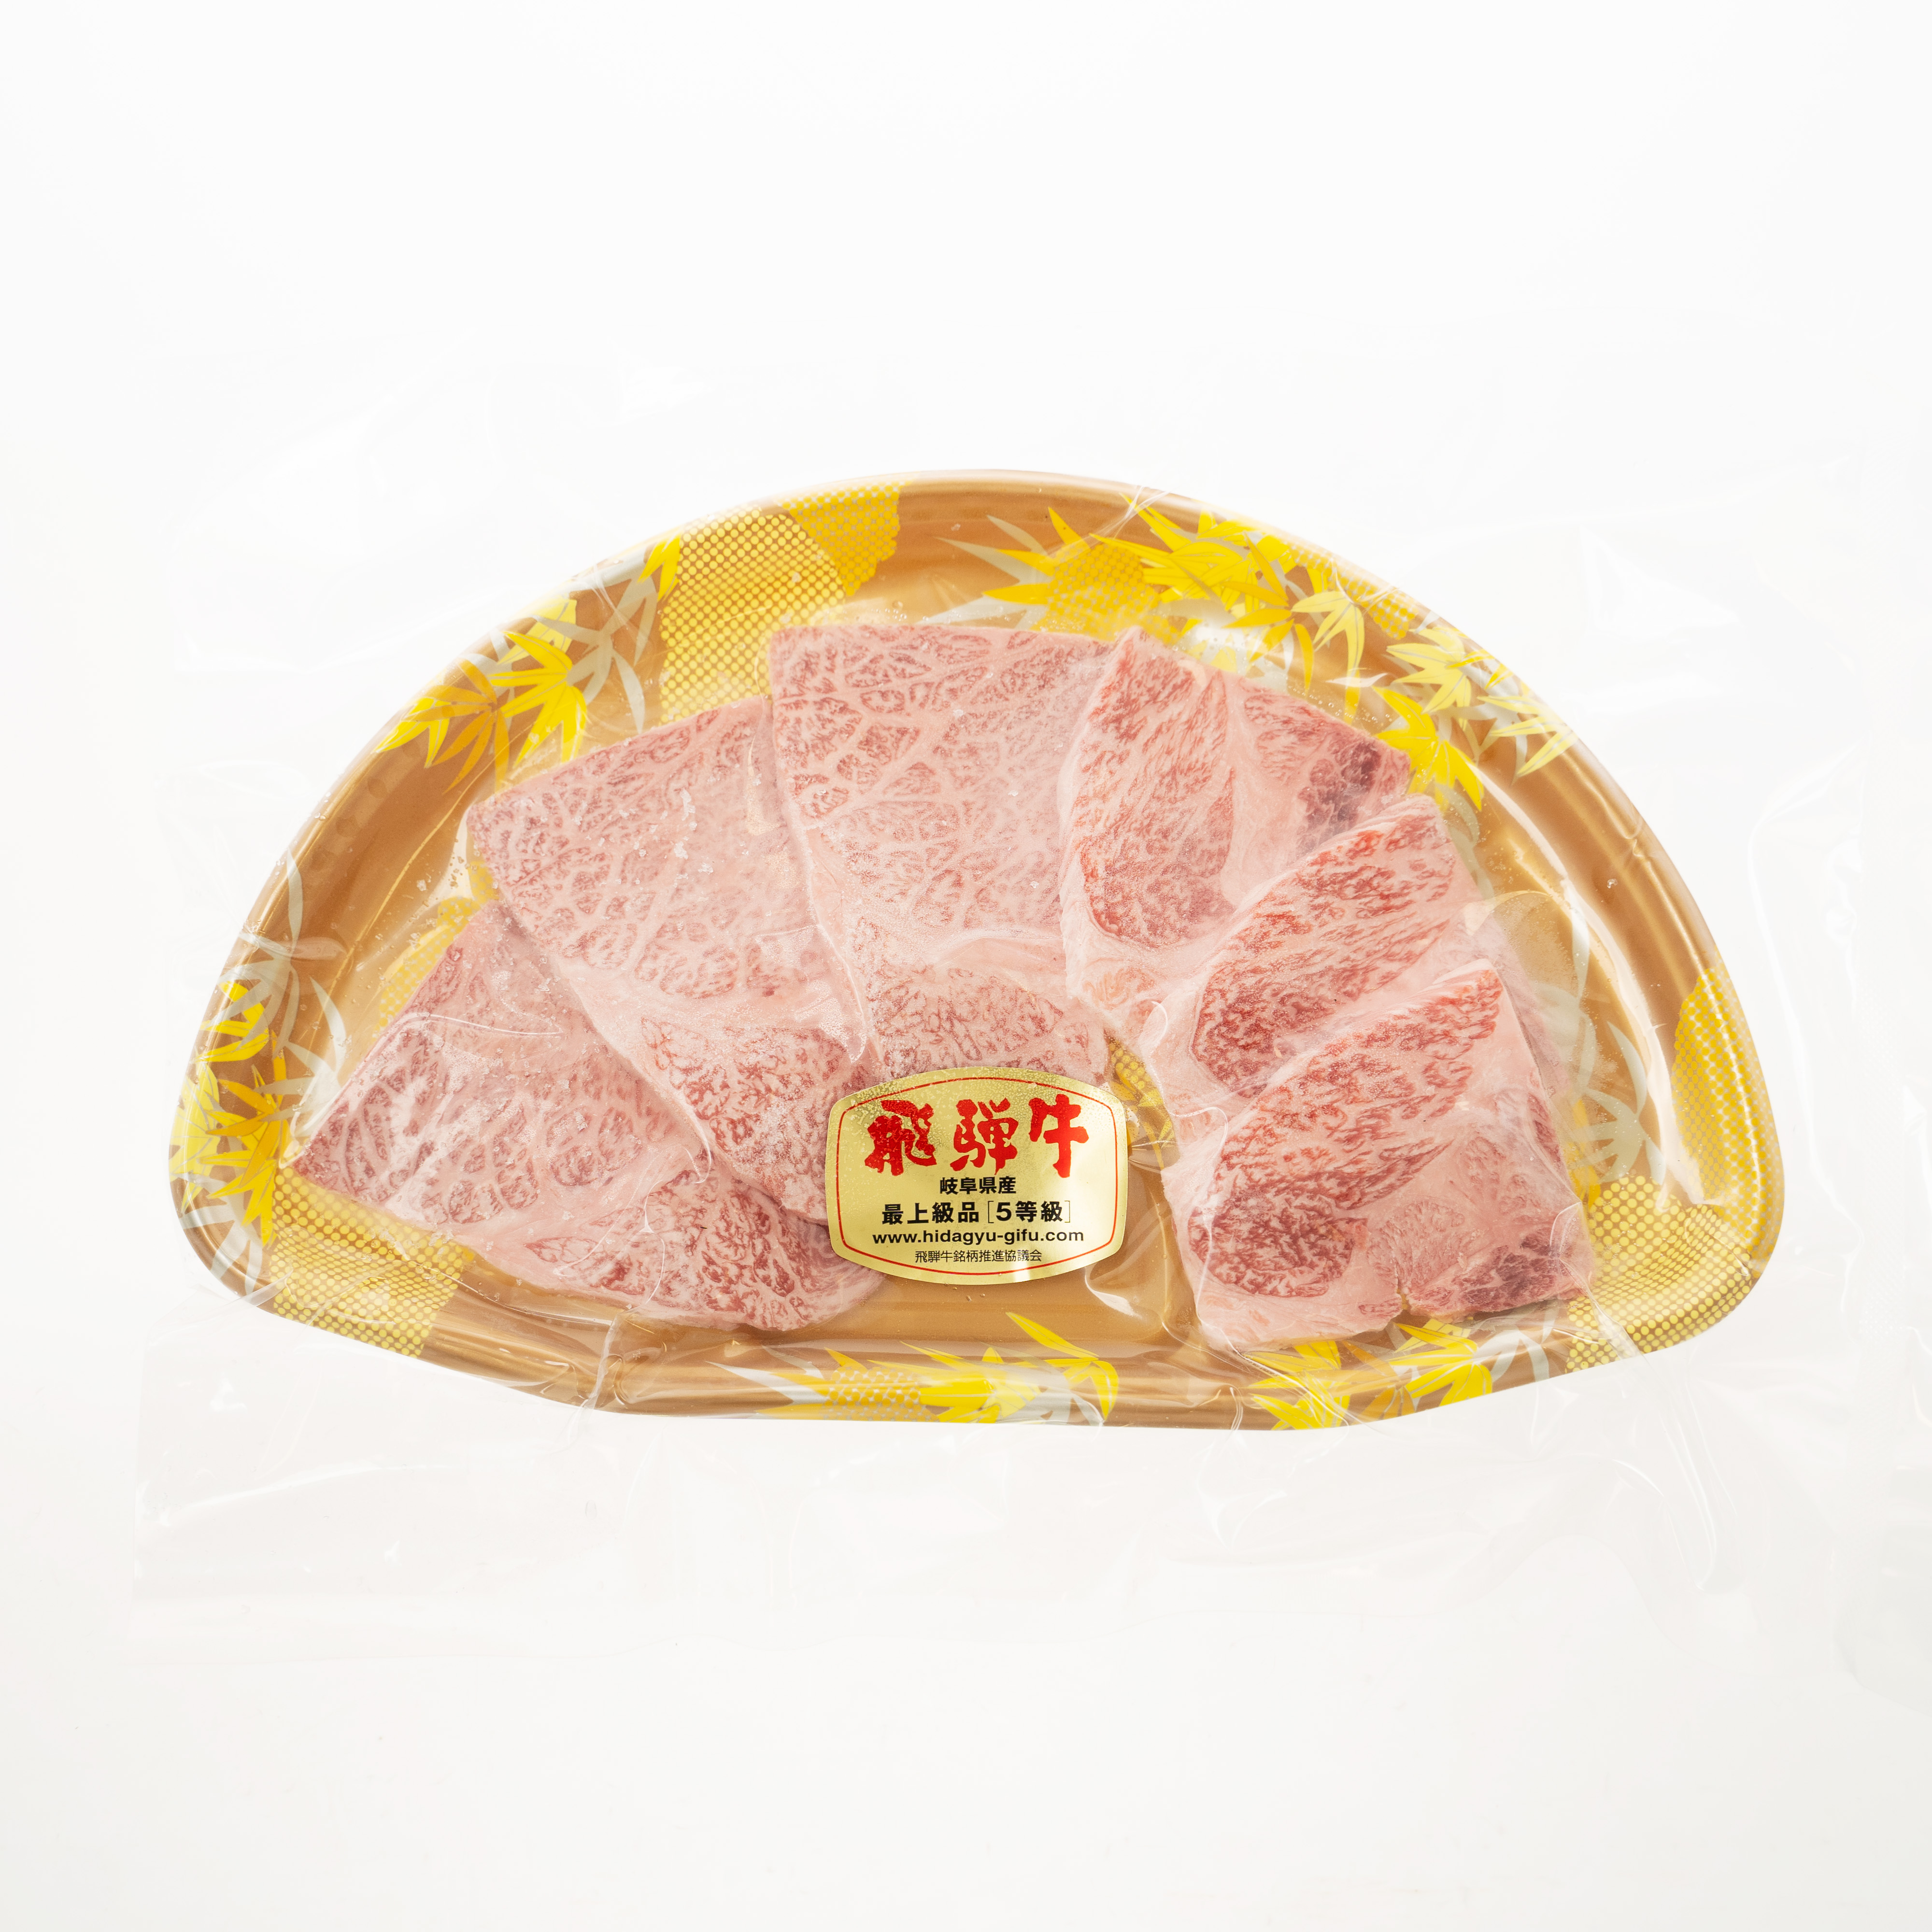 Hida Premium A5 Wagyu Beef Short Rib 150g-eBest-Beef,Meat deli & eggs